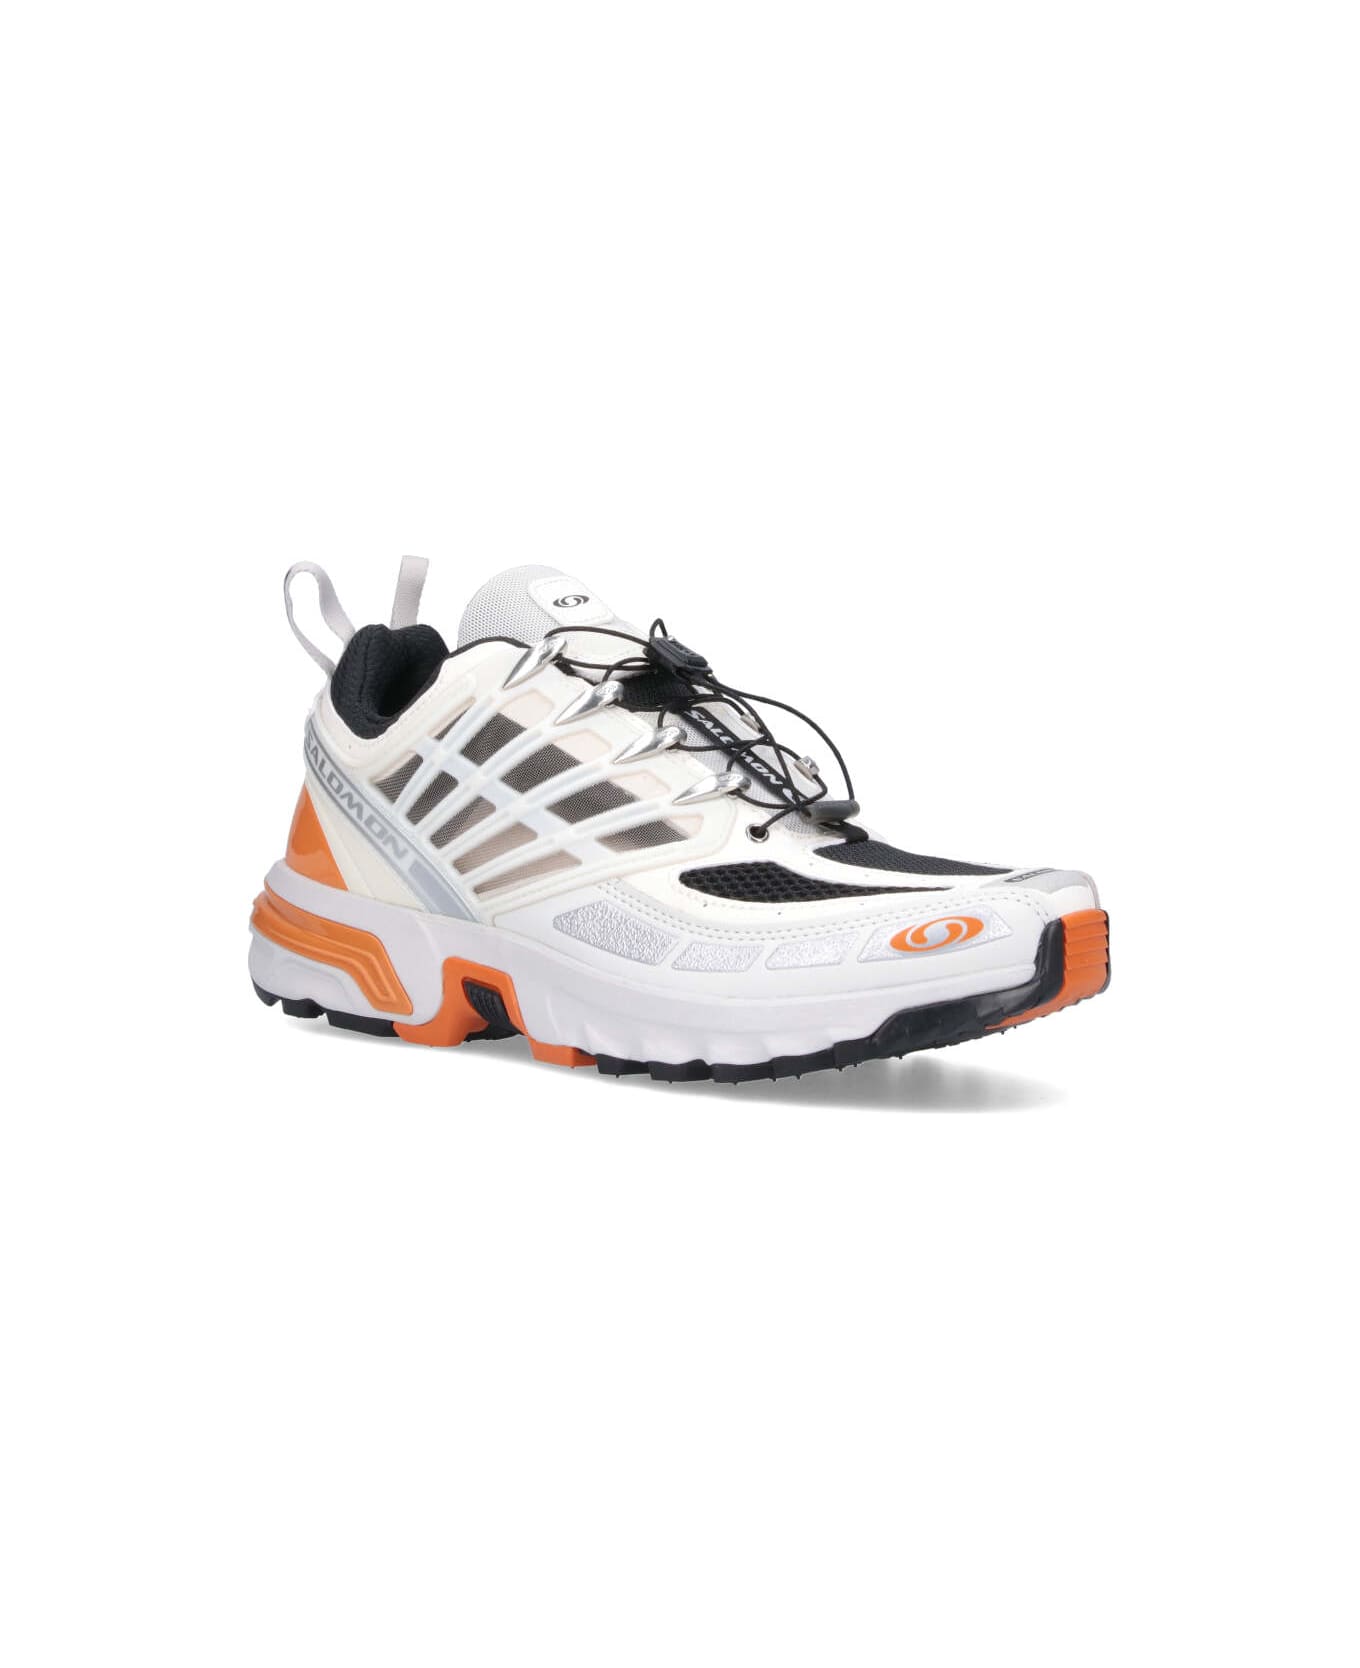 Salomon Sneakers "acs Pro Vanilla Ice Lunar Rock Tomato" - White